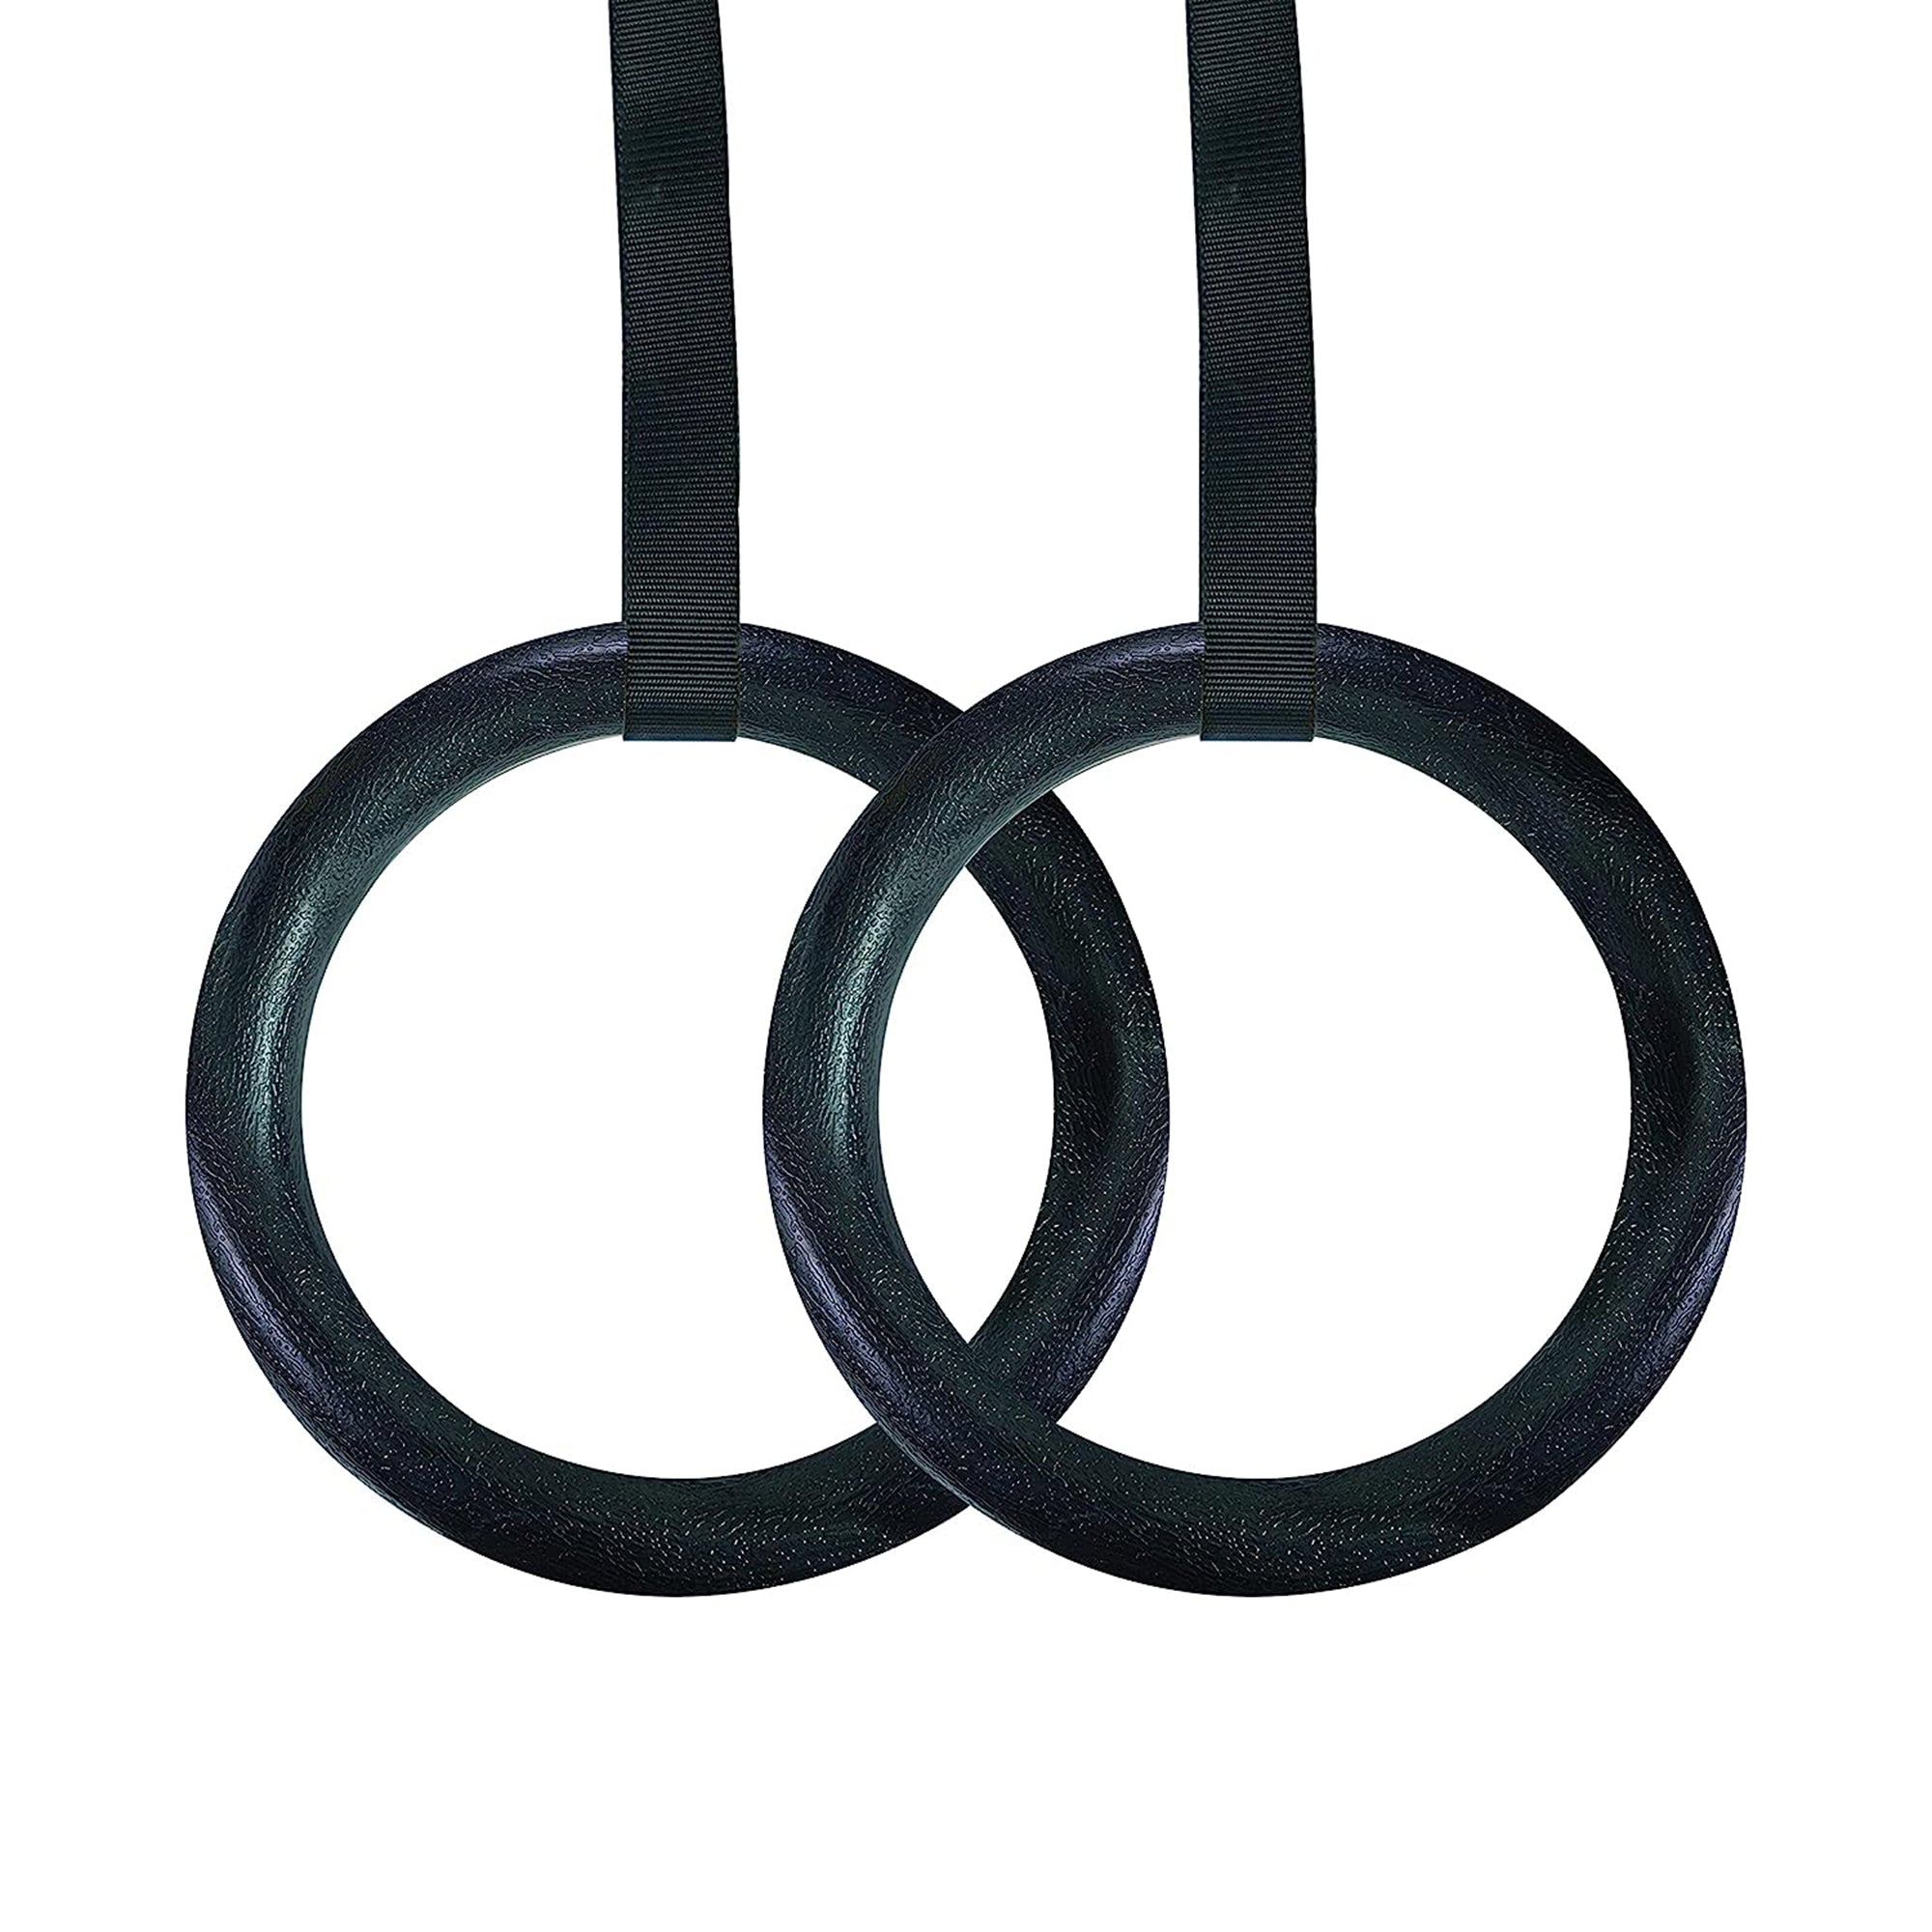 Manogyam Gymnastic Roman Rings - High Quality & Affordable ( Plastic )